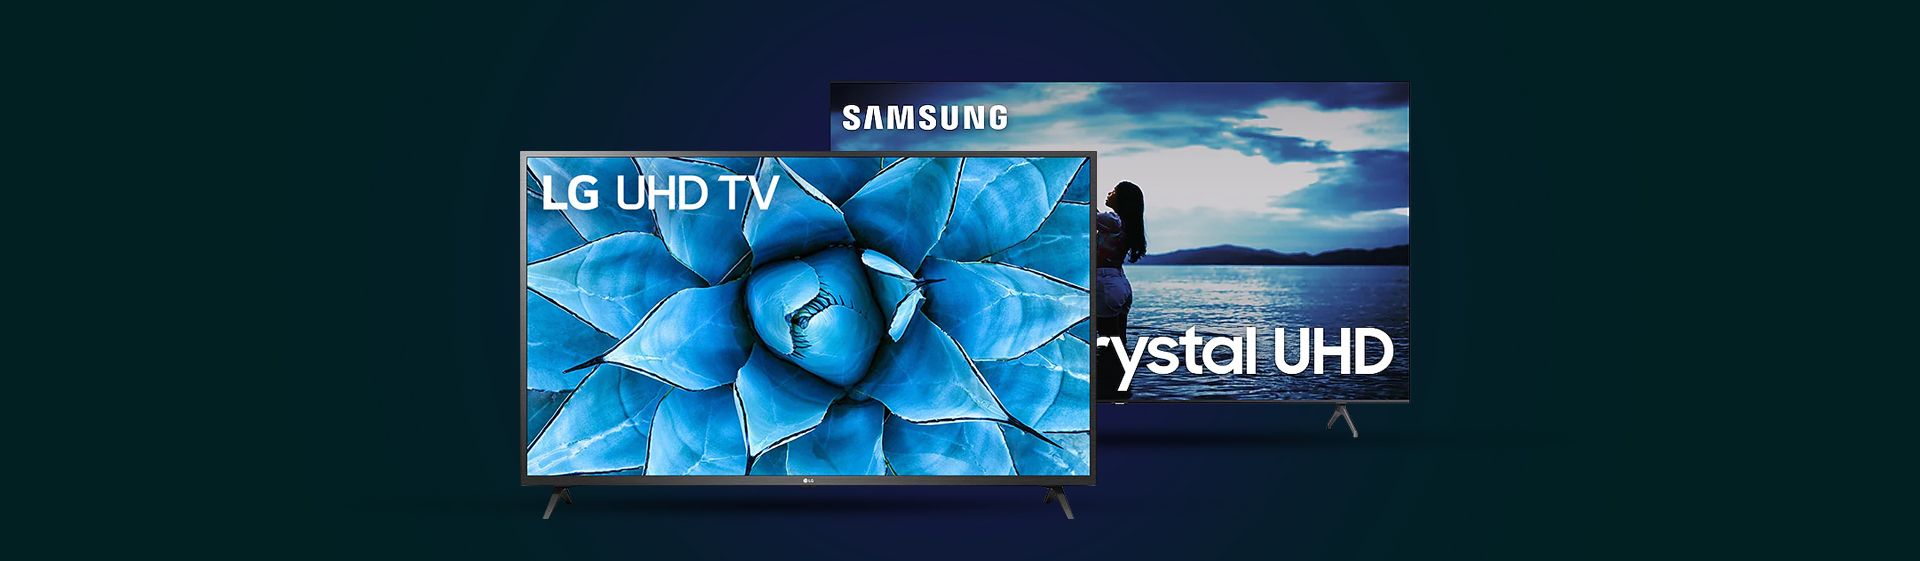 TVs LG ou Samsung? Confira o comparativo entre as TVs de cada marca